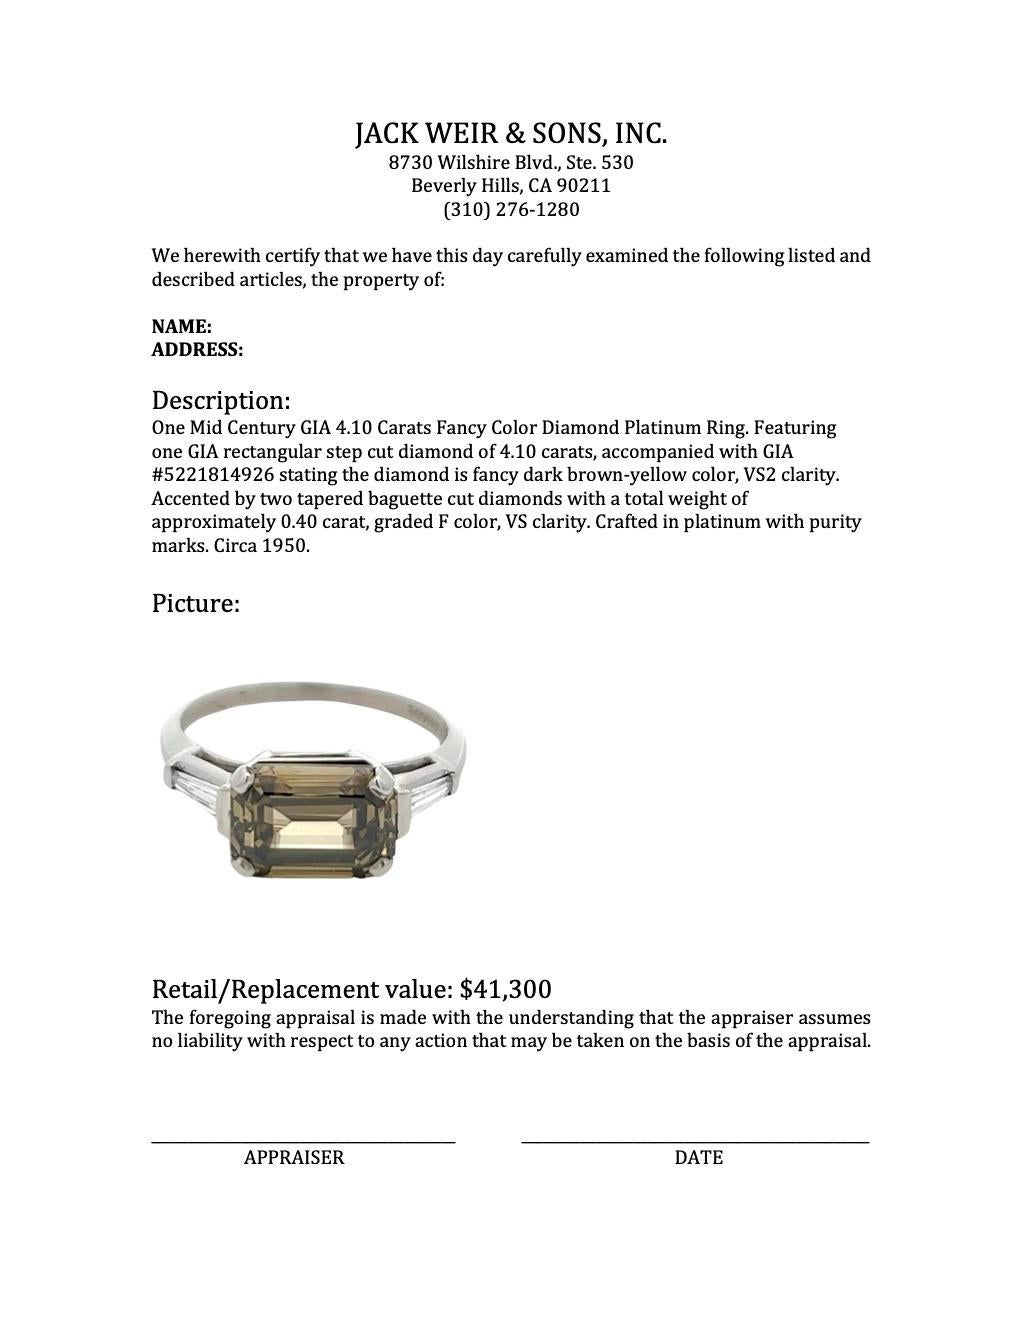 Midcentury GIA 4.10 Carats Fancy Color Diamond Platinum Ring 3